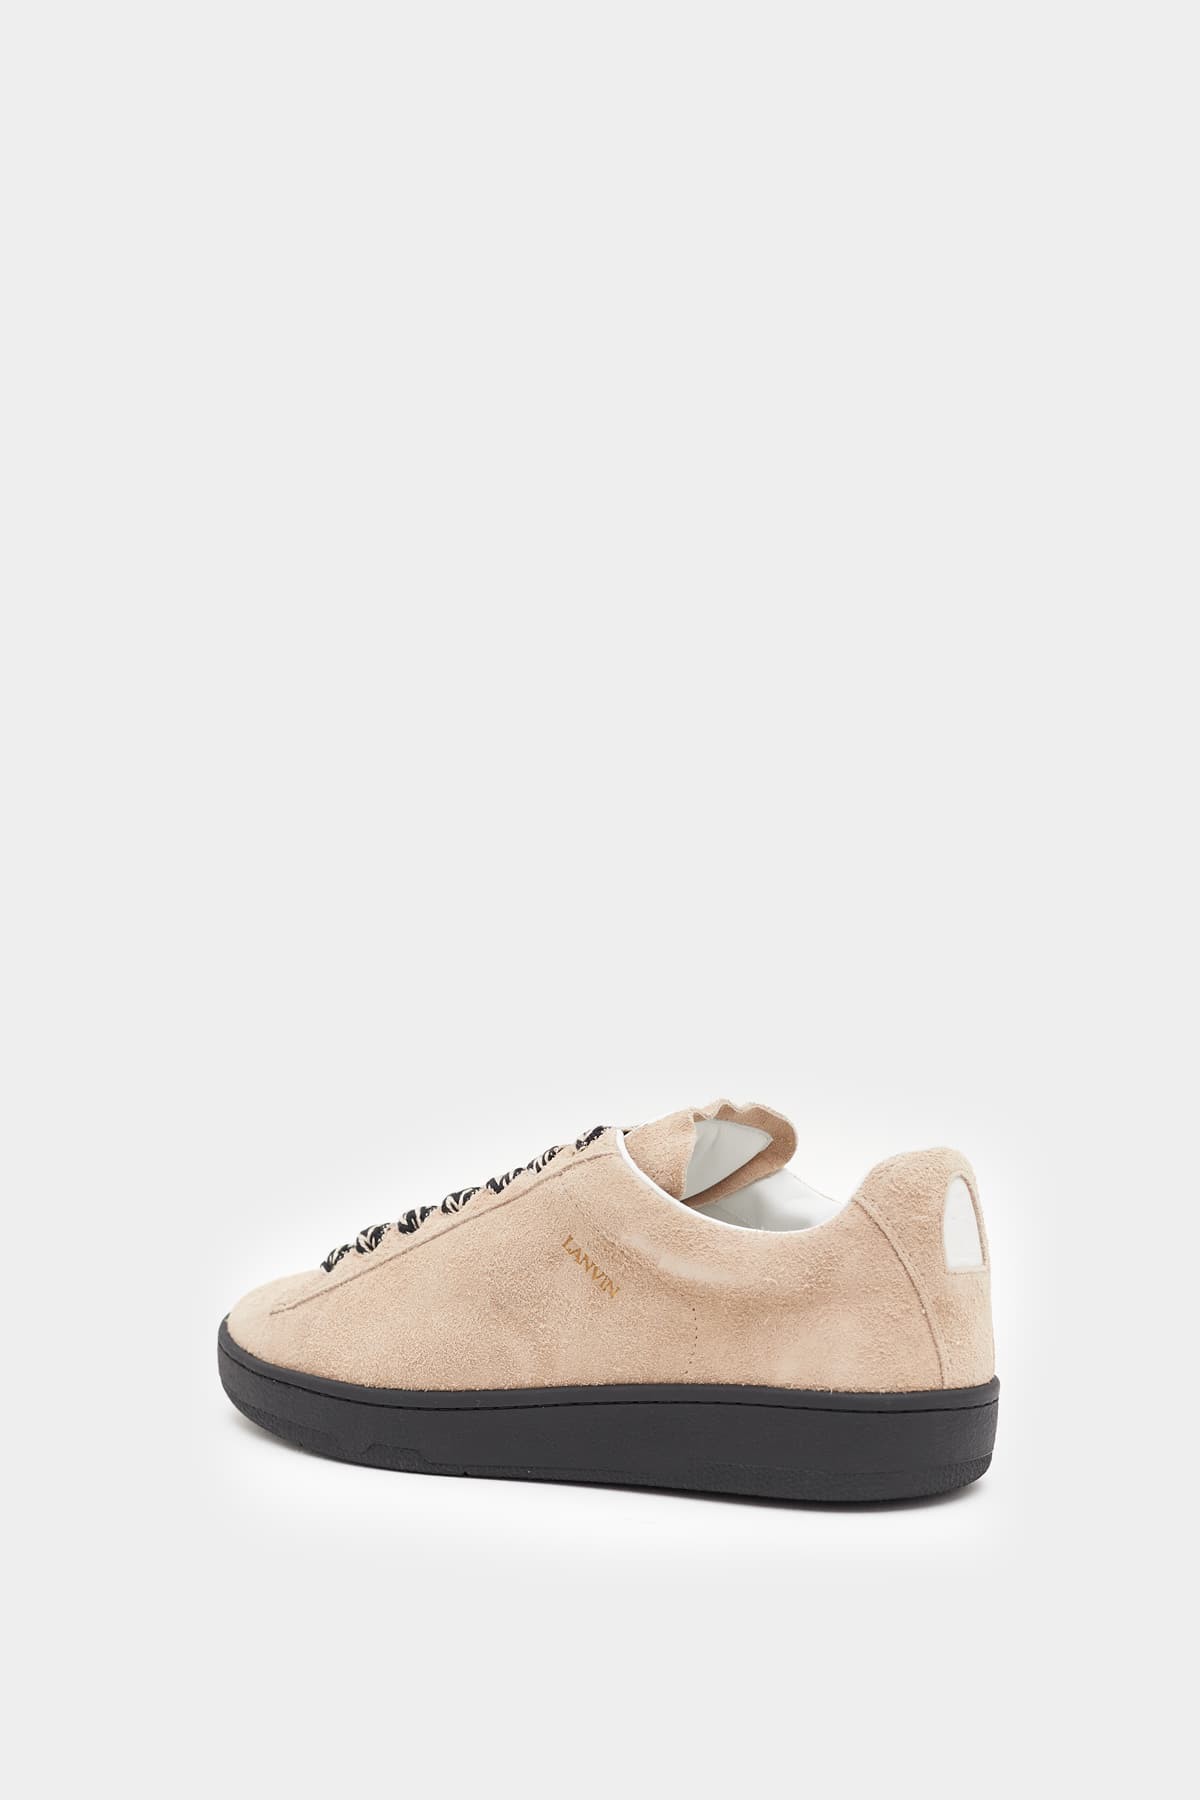 Tom Ford Russel Calf Leather Low Top Sneaker Light Brown, $890 | Bergdorf  Goodman | Lookastic